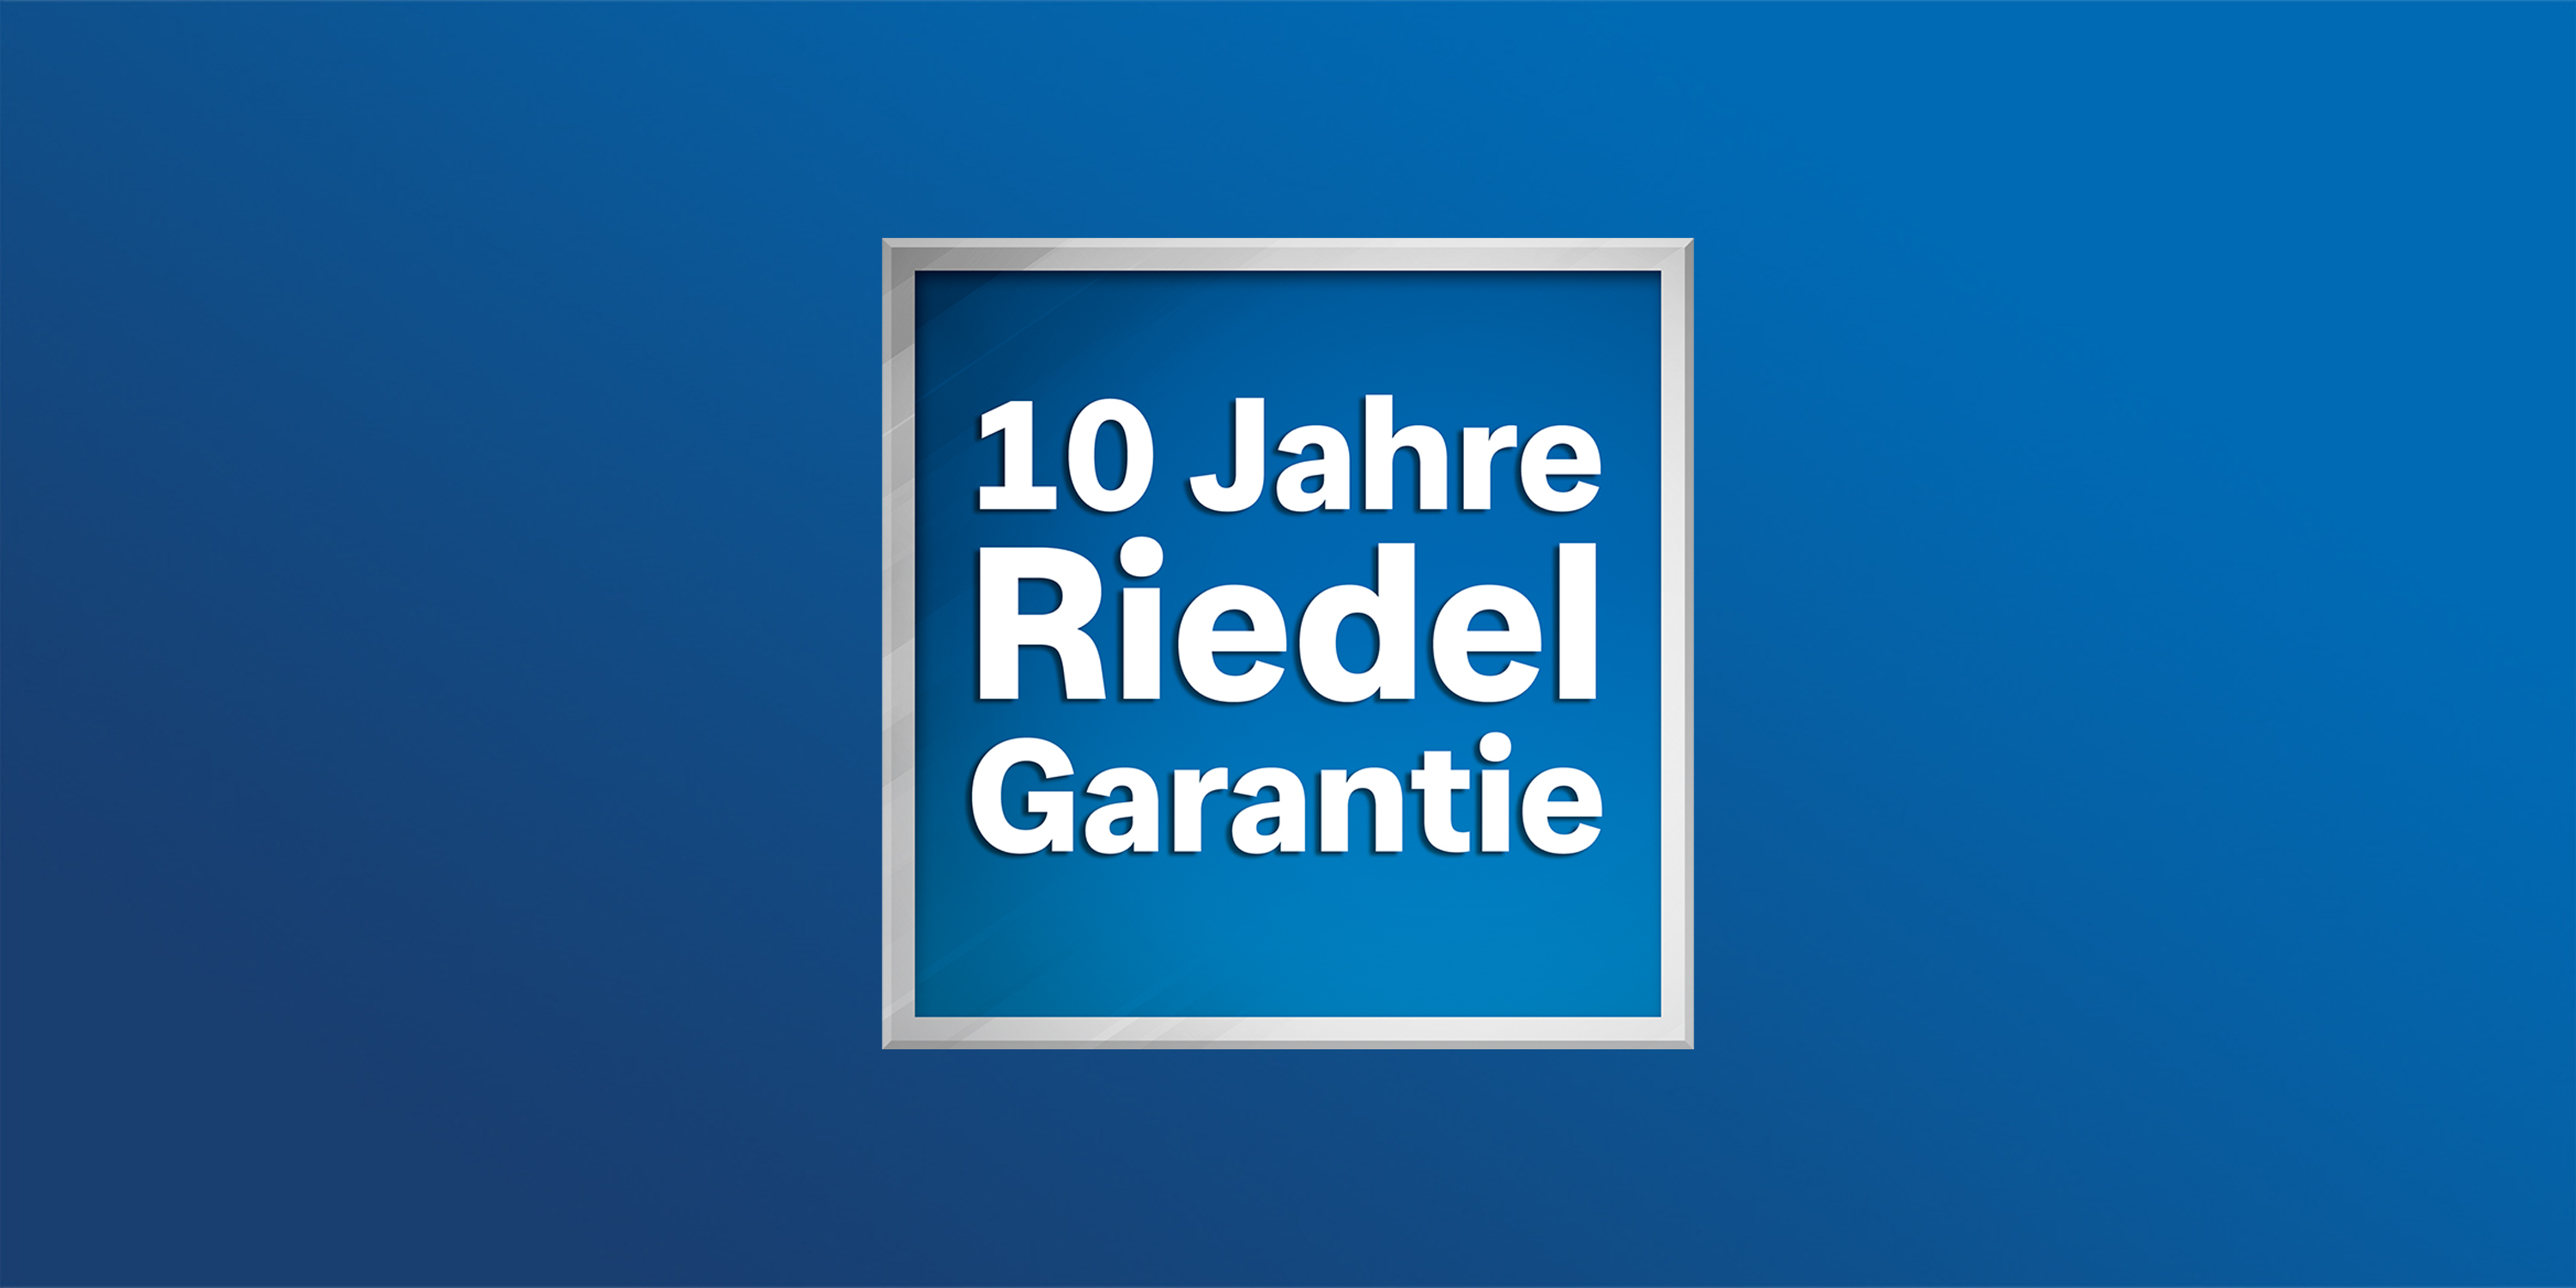 Riedel Kooling, Riedel Kältetechnik, 10 Jahre Riedel Garantie, bester Service, Bild